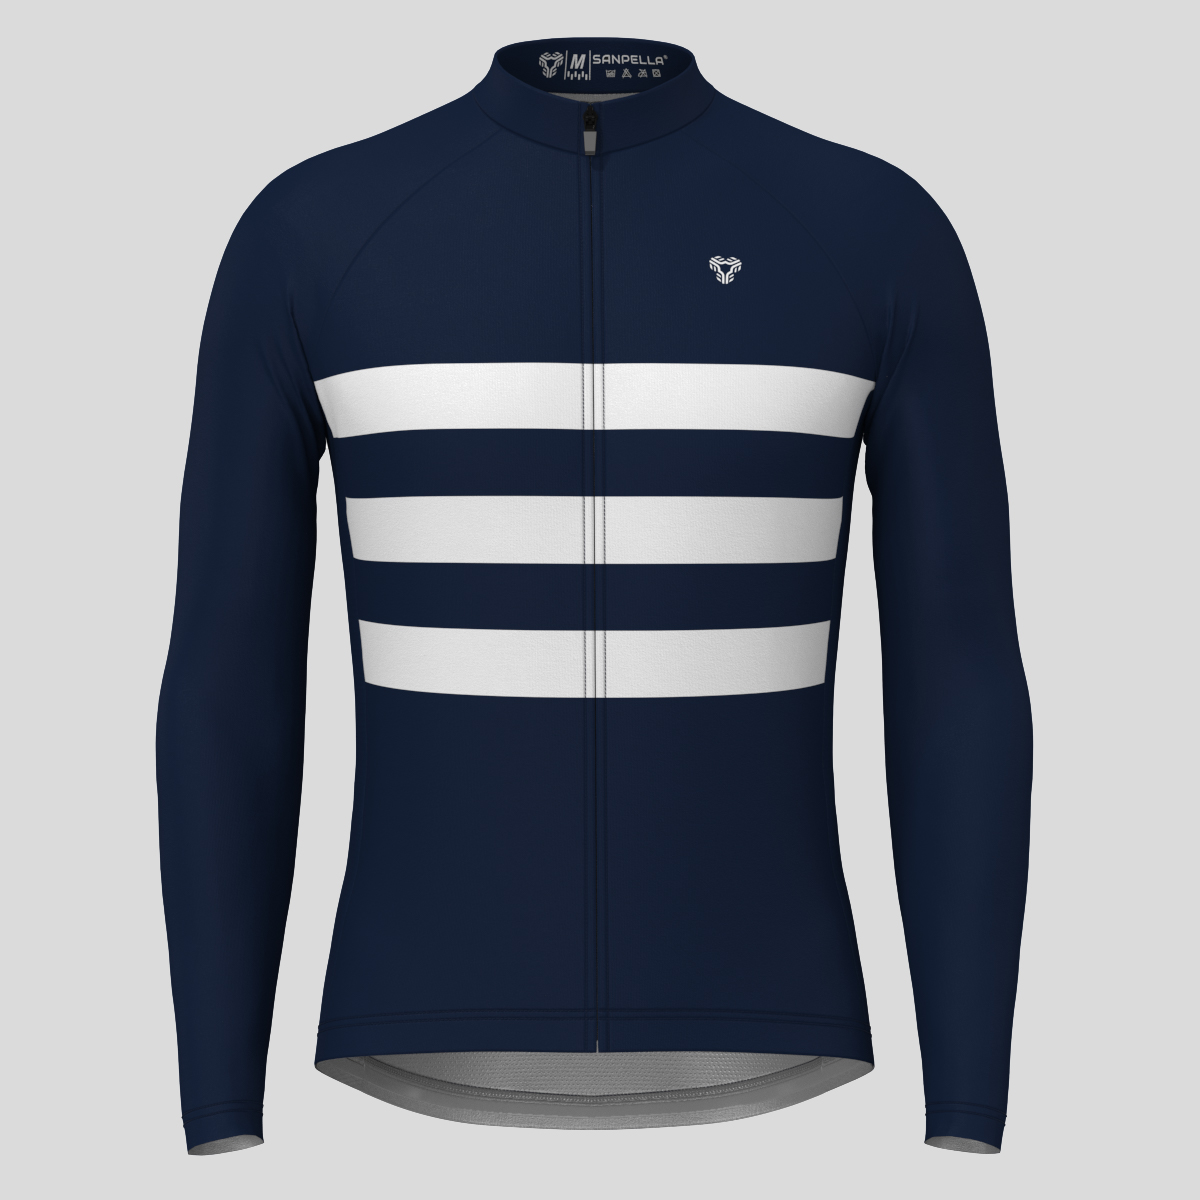 Minimal Stripes Men's LS Cycling Jersey - Navy/White